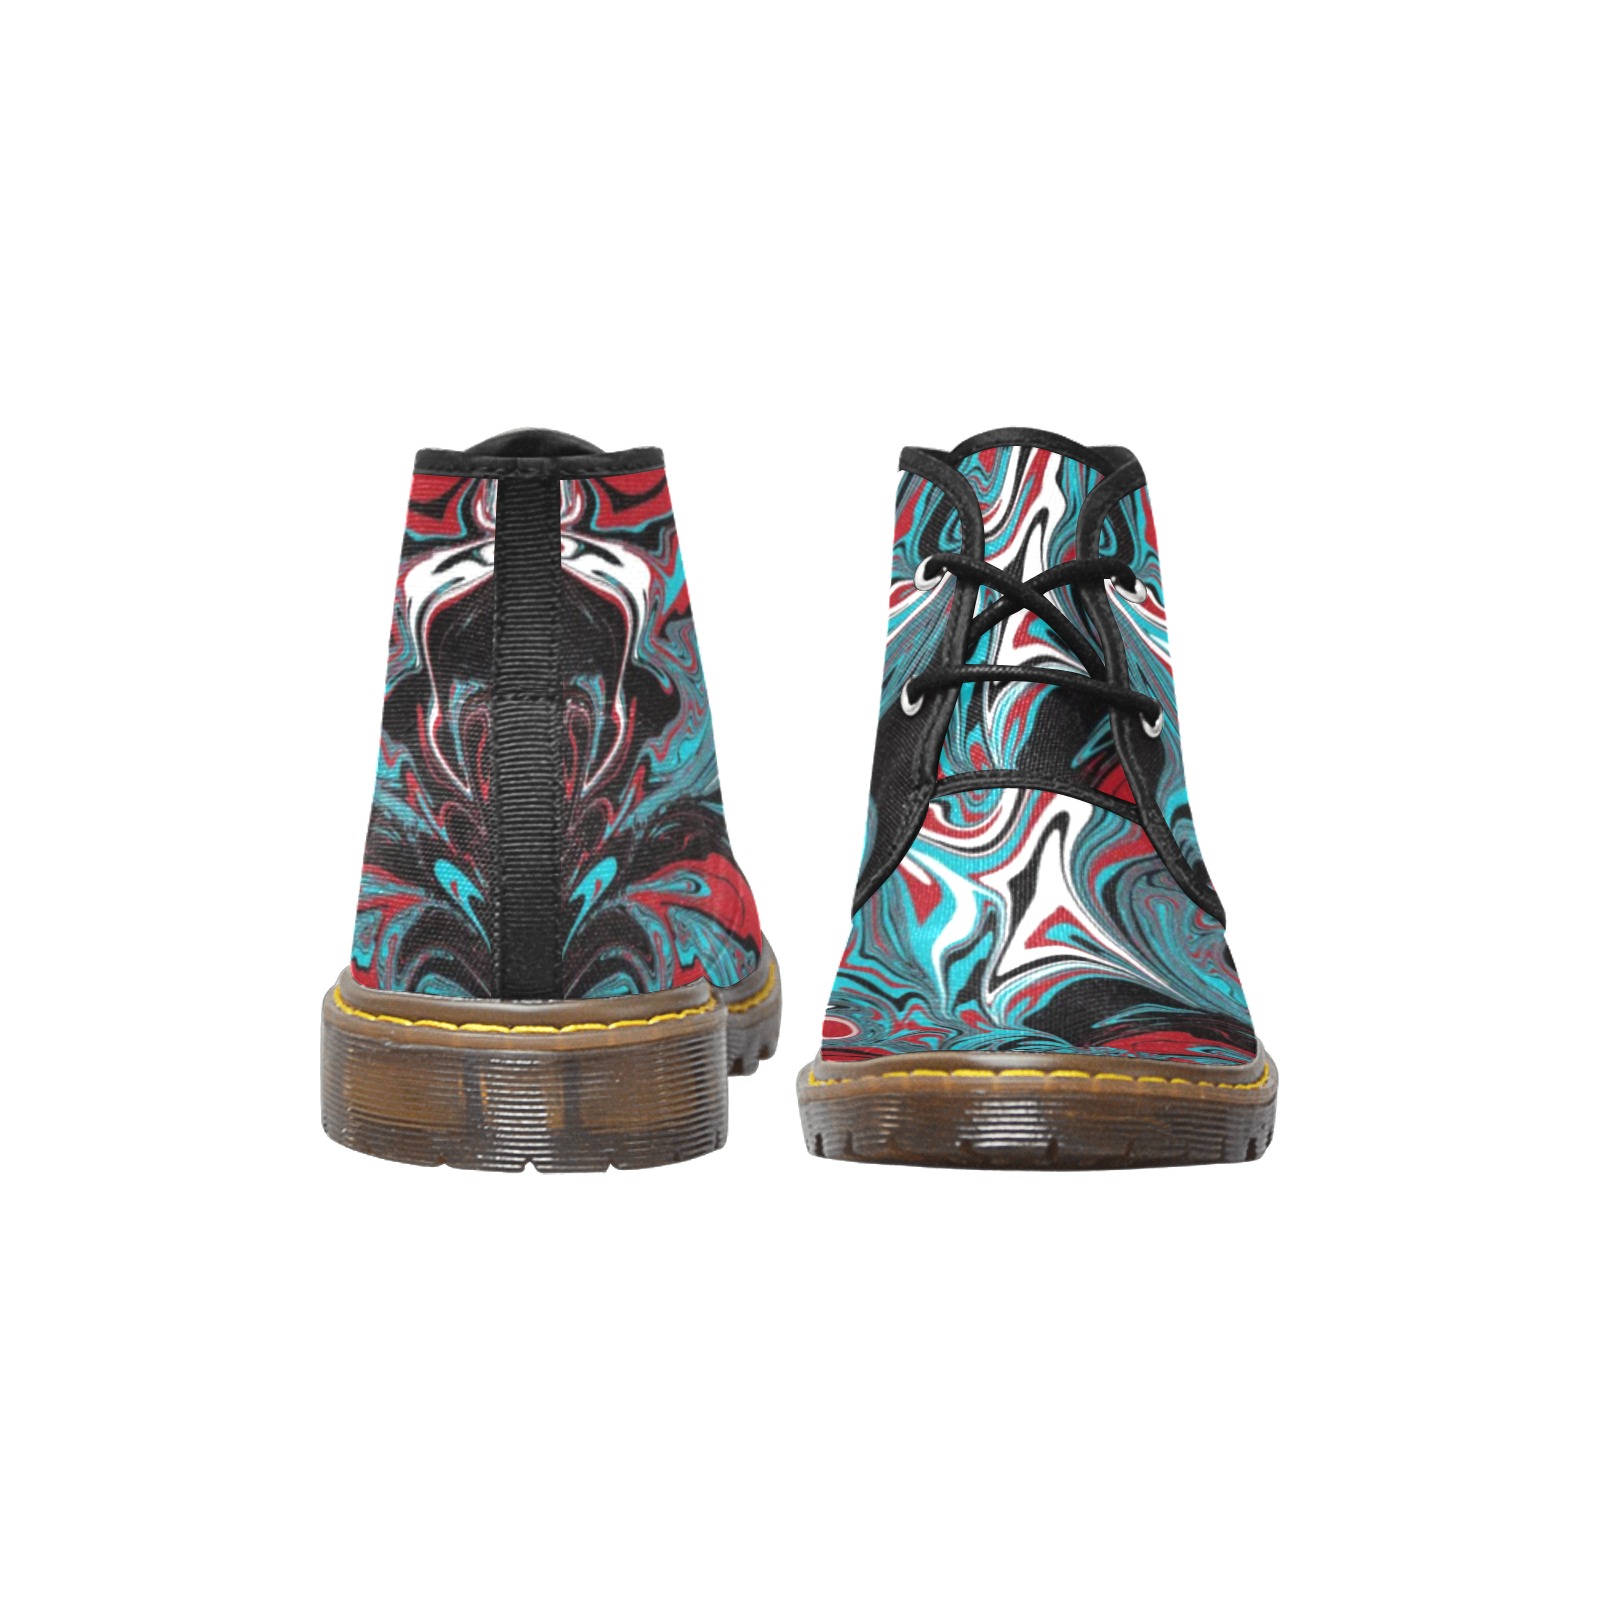 Dark Wave of Colors Women's Canvas Chukka Boots (Model 2402-1)